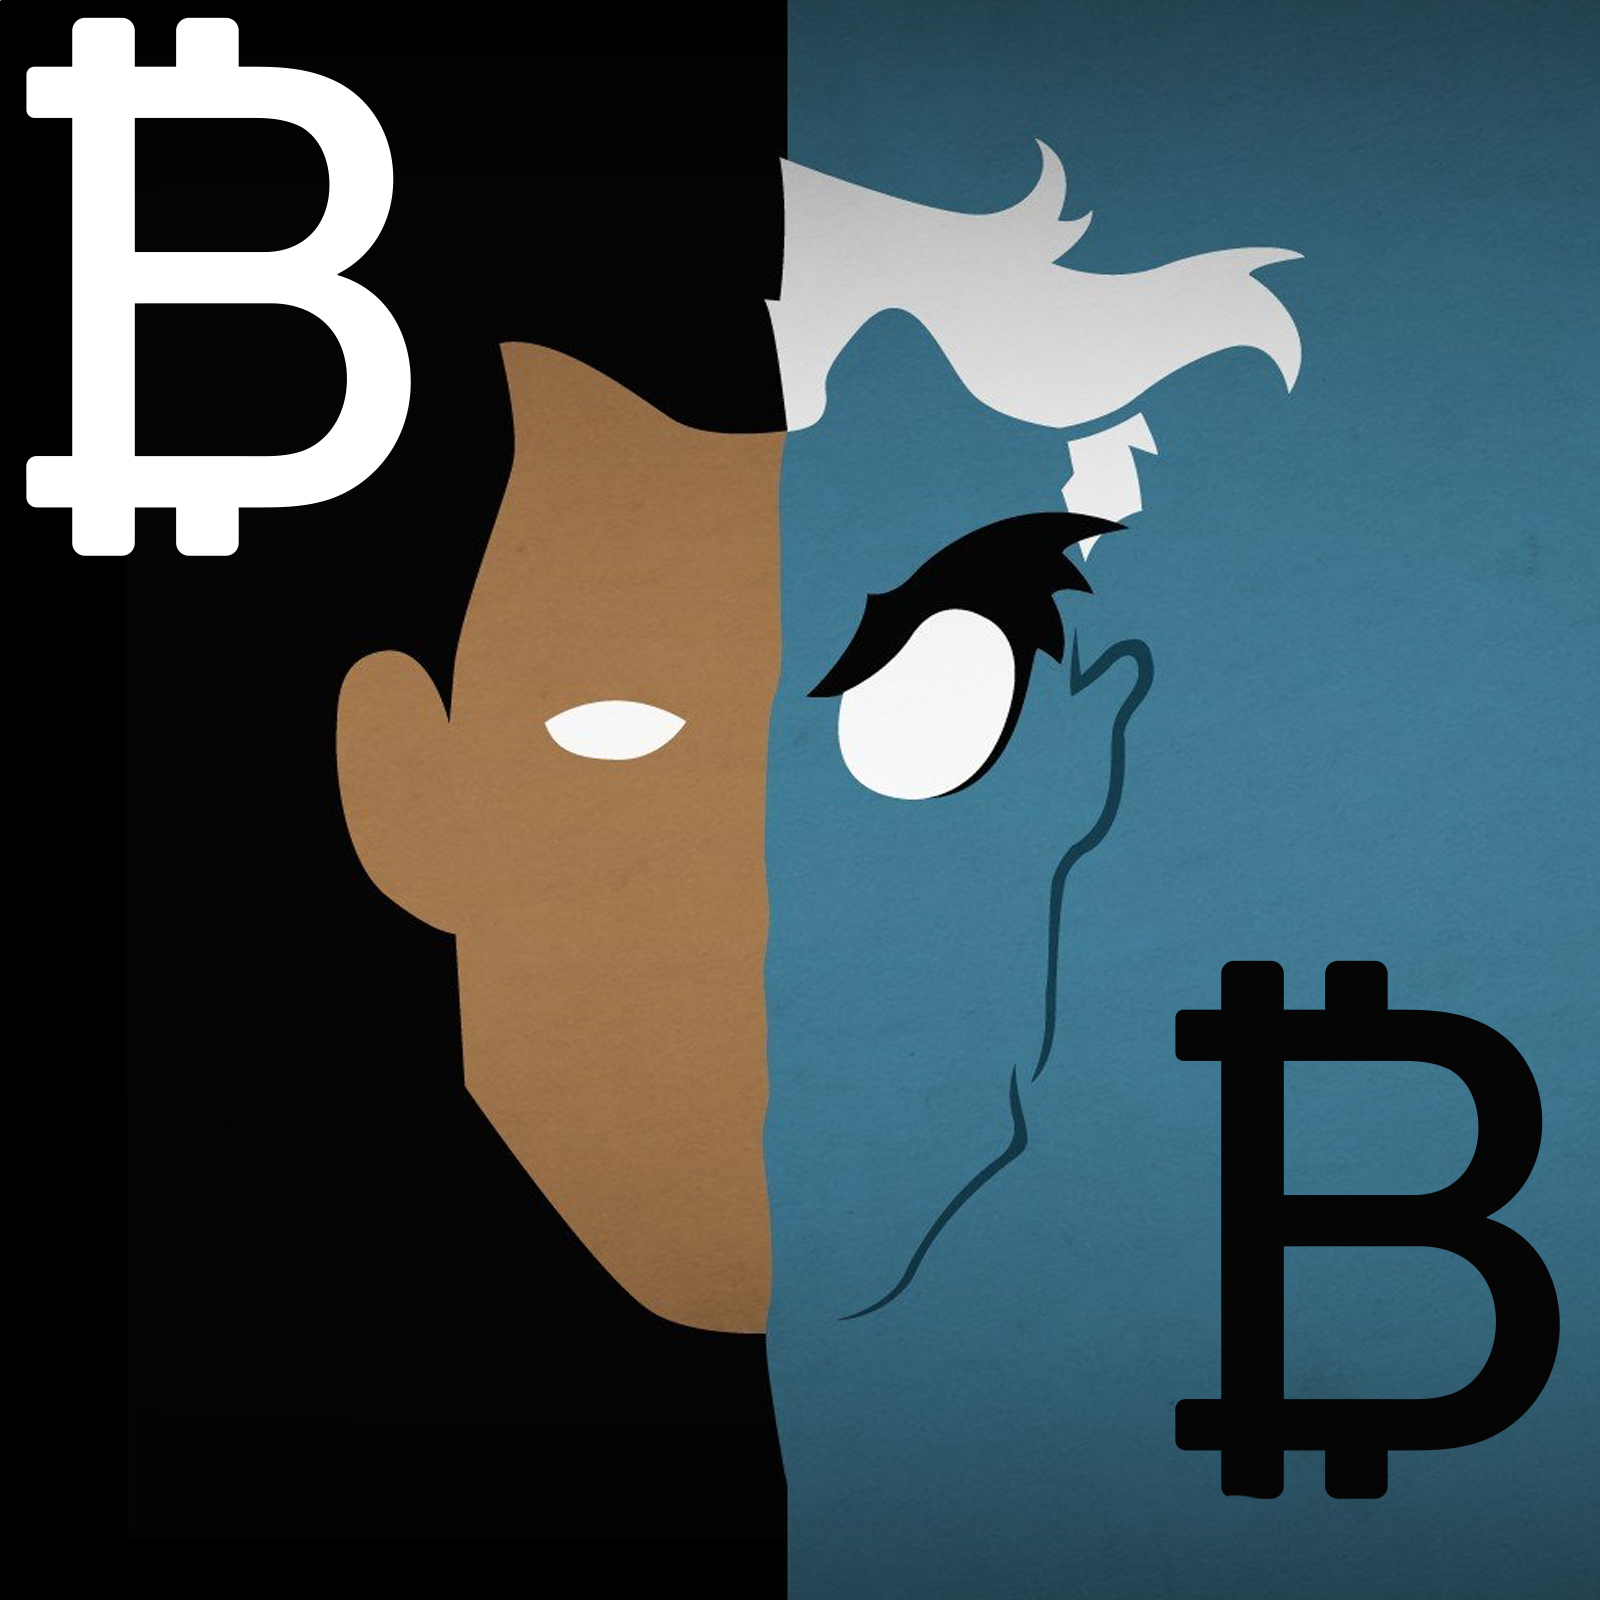 Study Shows an Interesting Look at Changing Bitcoin Narratives